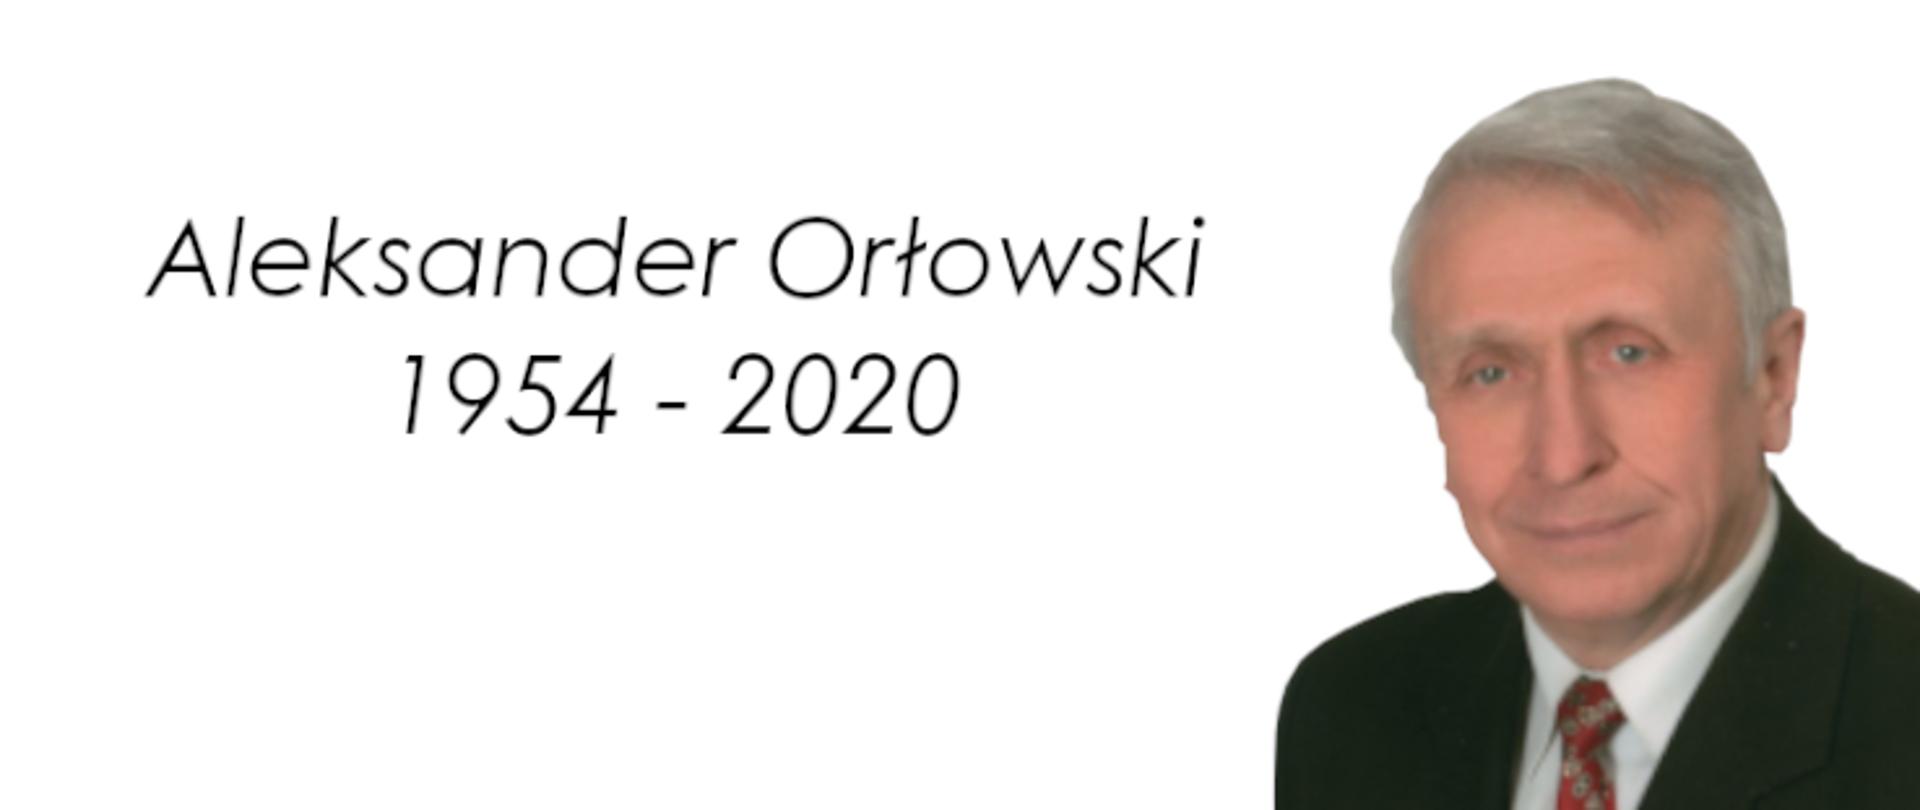 Aleksander Orłowski - 1954 - 2020